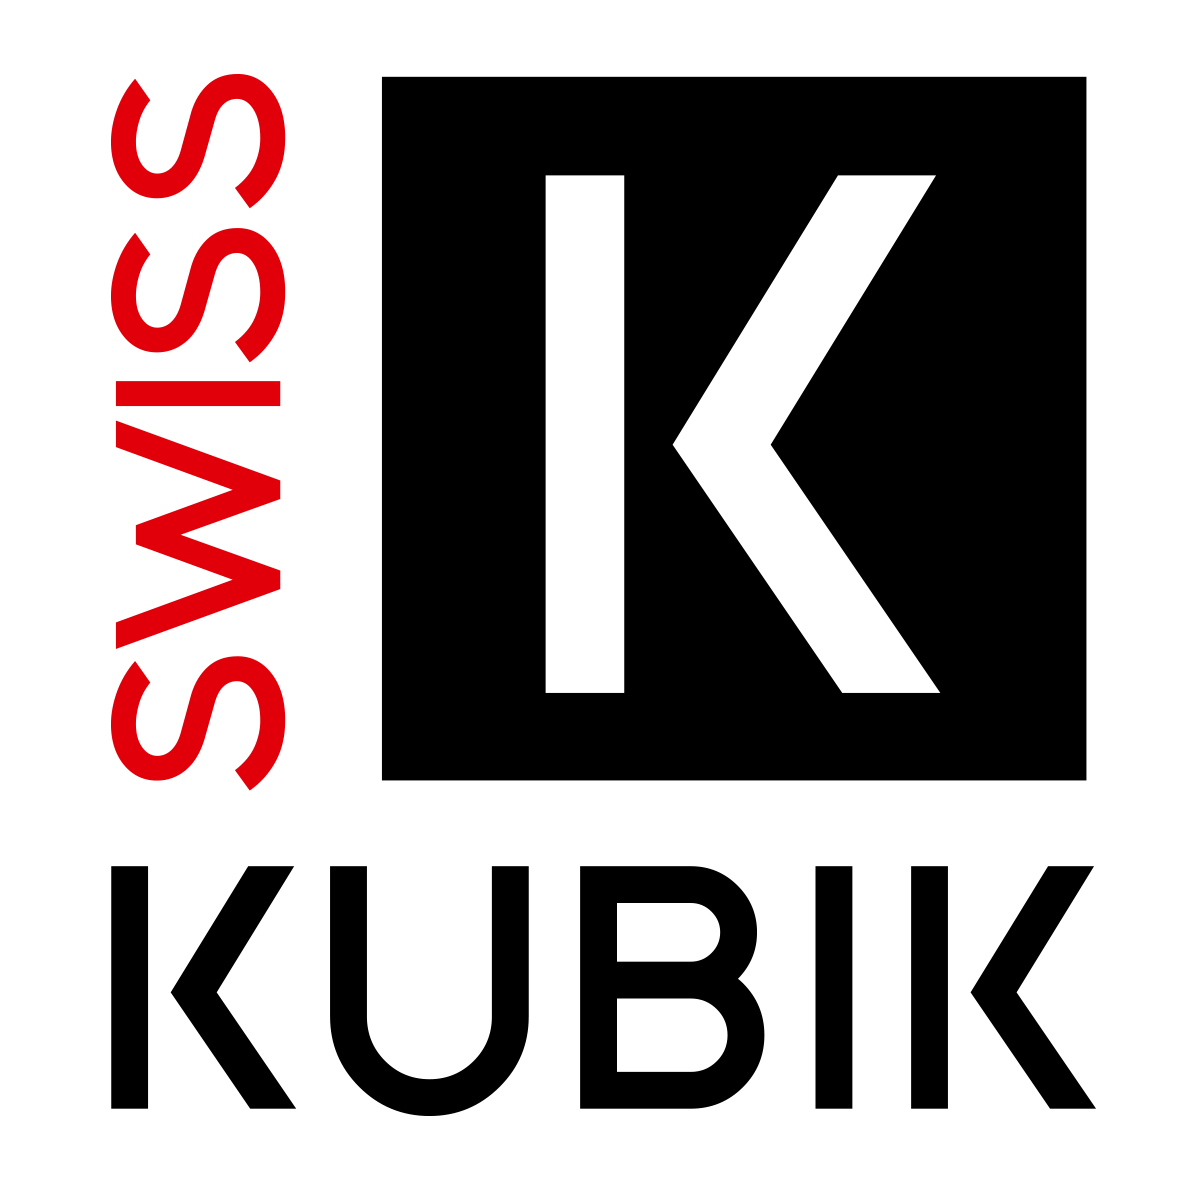 SwissKubik